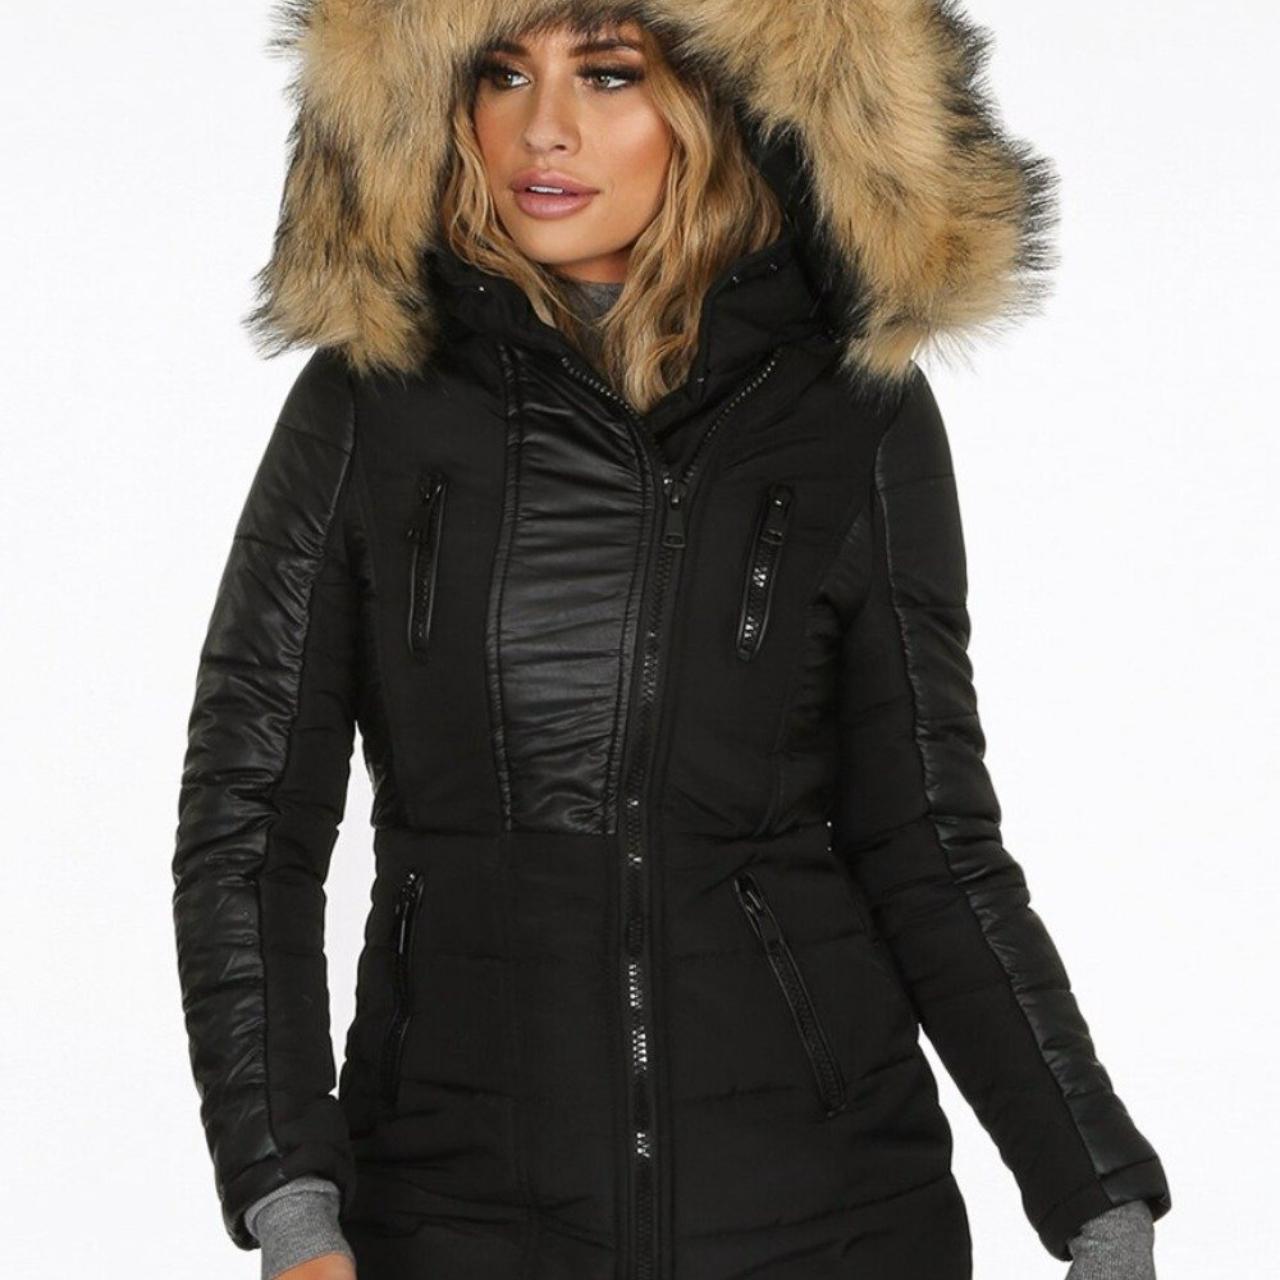 Women's Black Faux Fur Hooded Coat Size Small Medium... - Depop